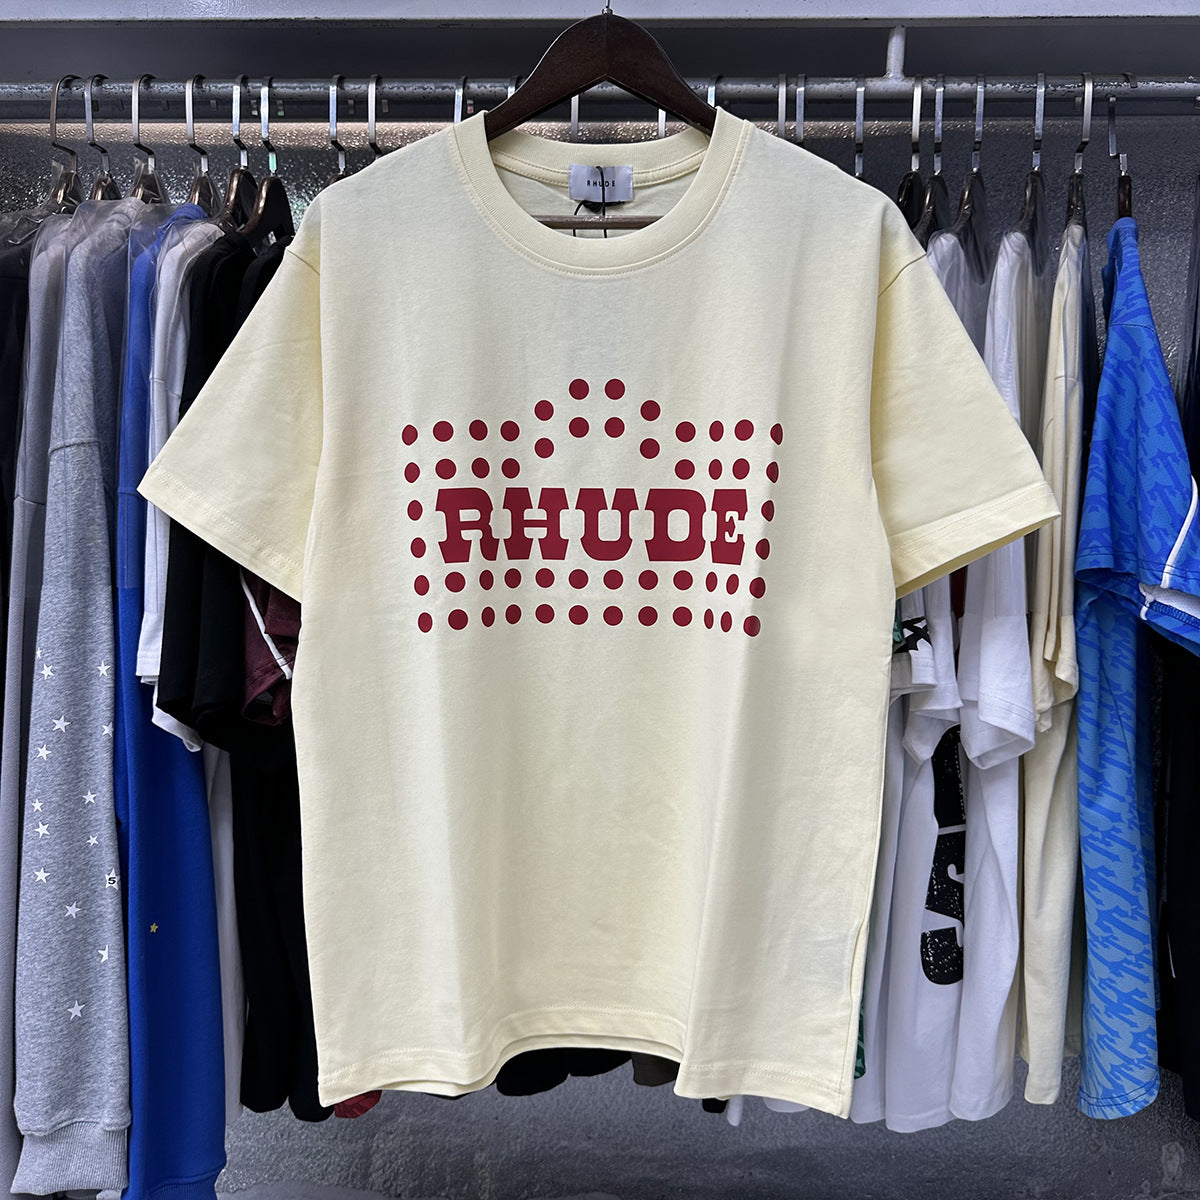 RHUDE FLOCKED BURNOUT T-Shirt